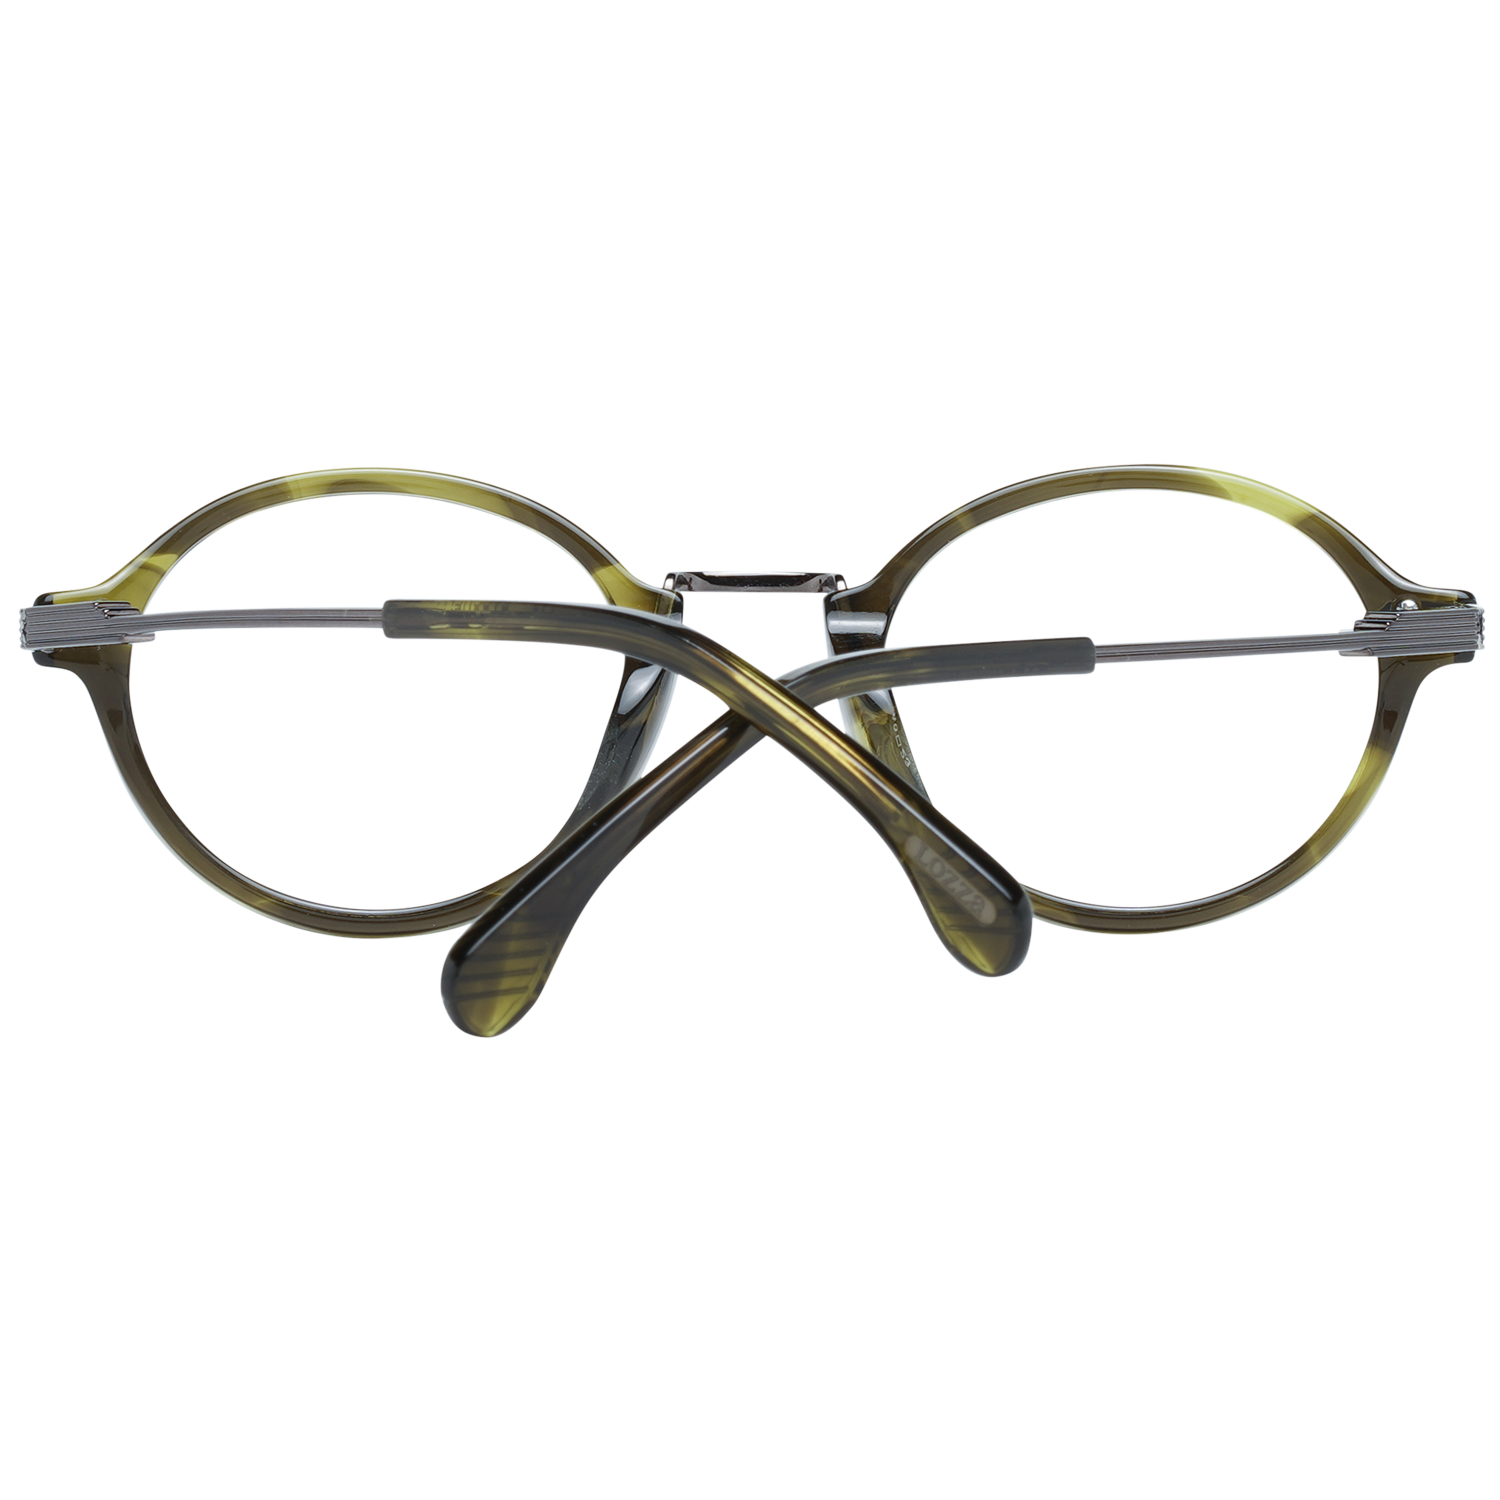 Lozza Frames Lozza Optical Frame VL4099 09W7 48 Eyeglasses Eyewear UK USA Australia 